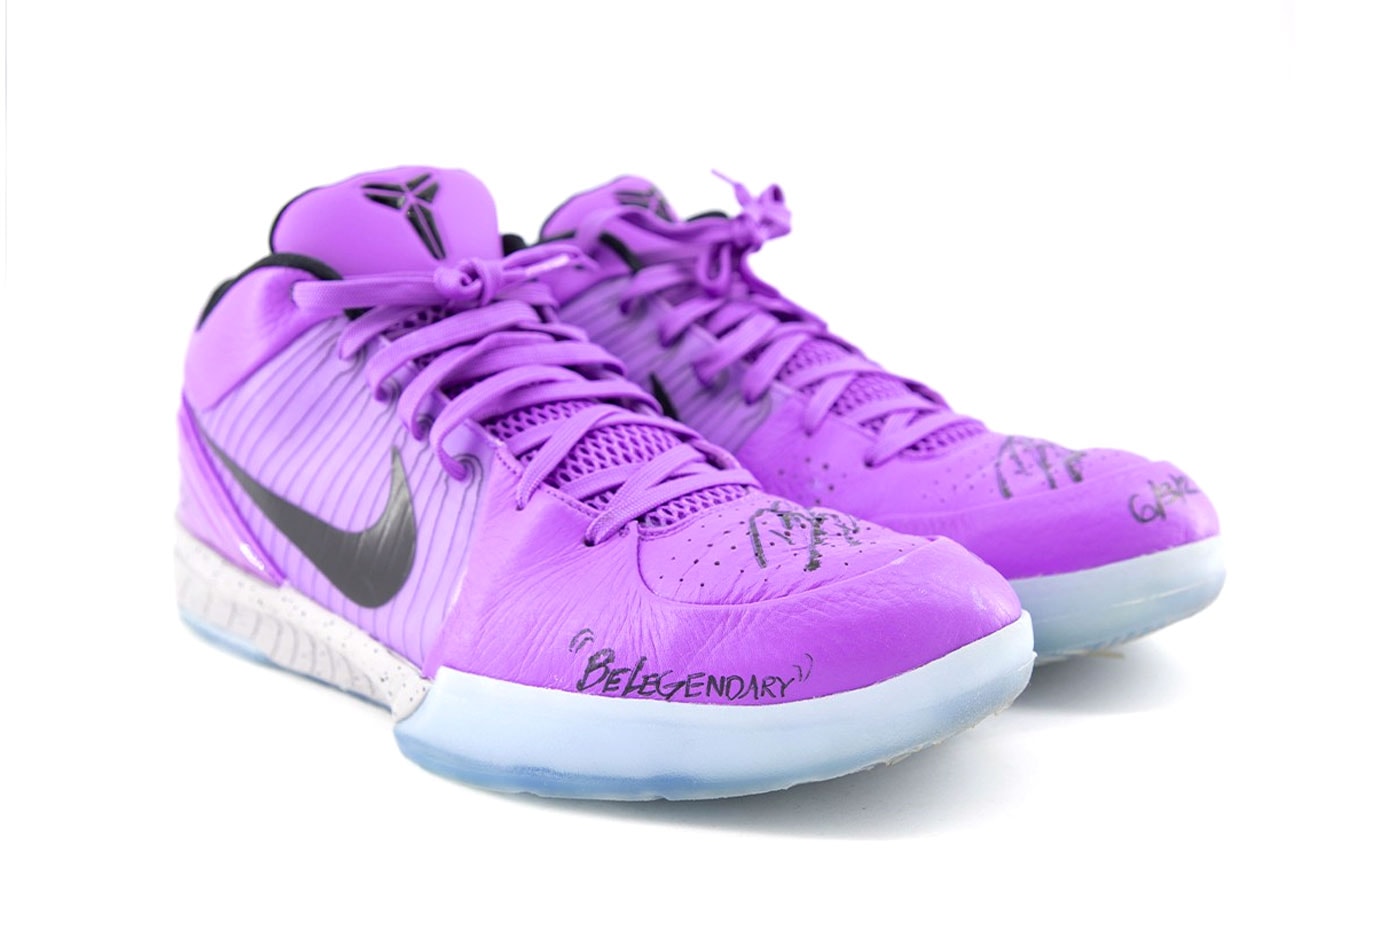 Kobe 6 Devin Booker PE basketball shoes